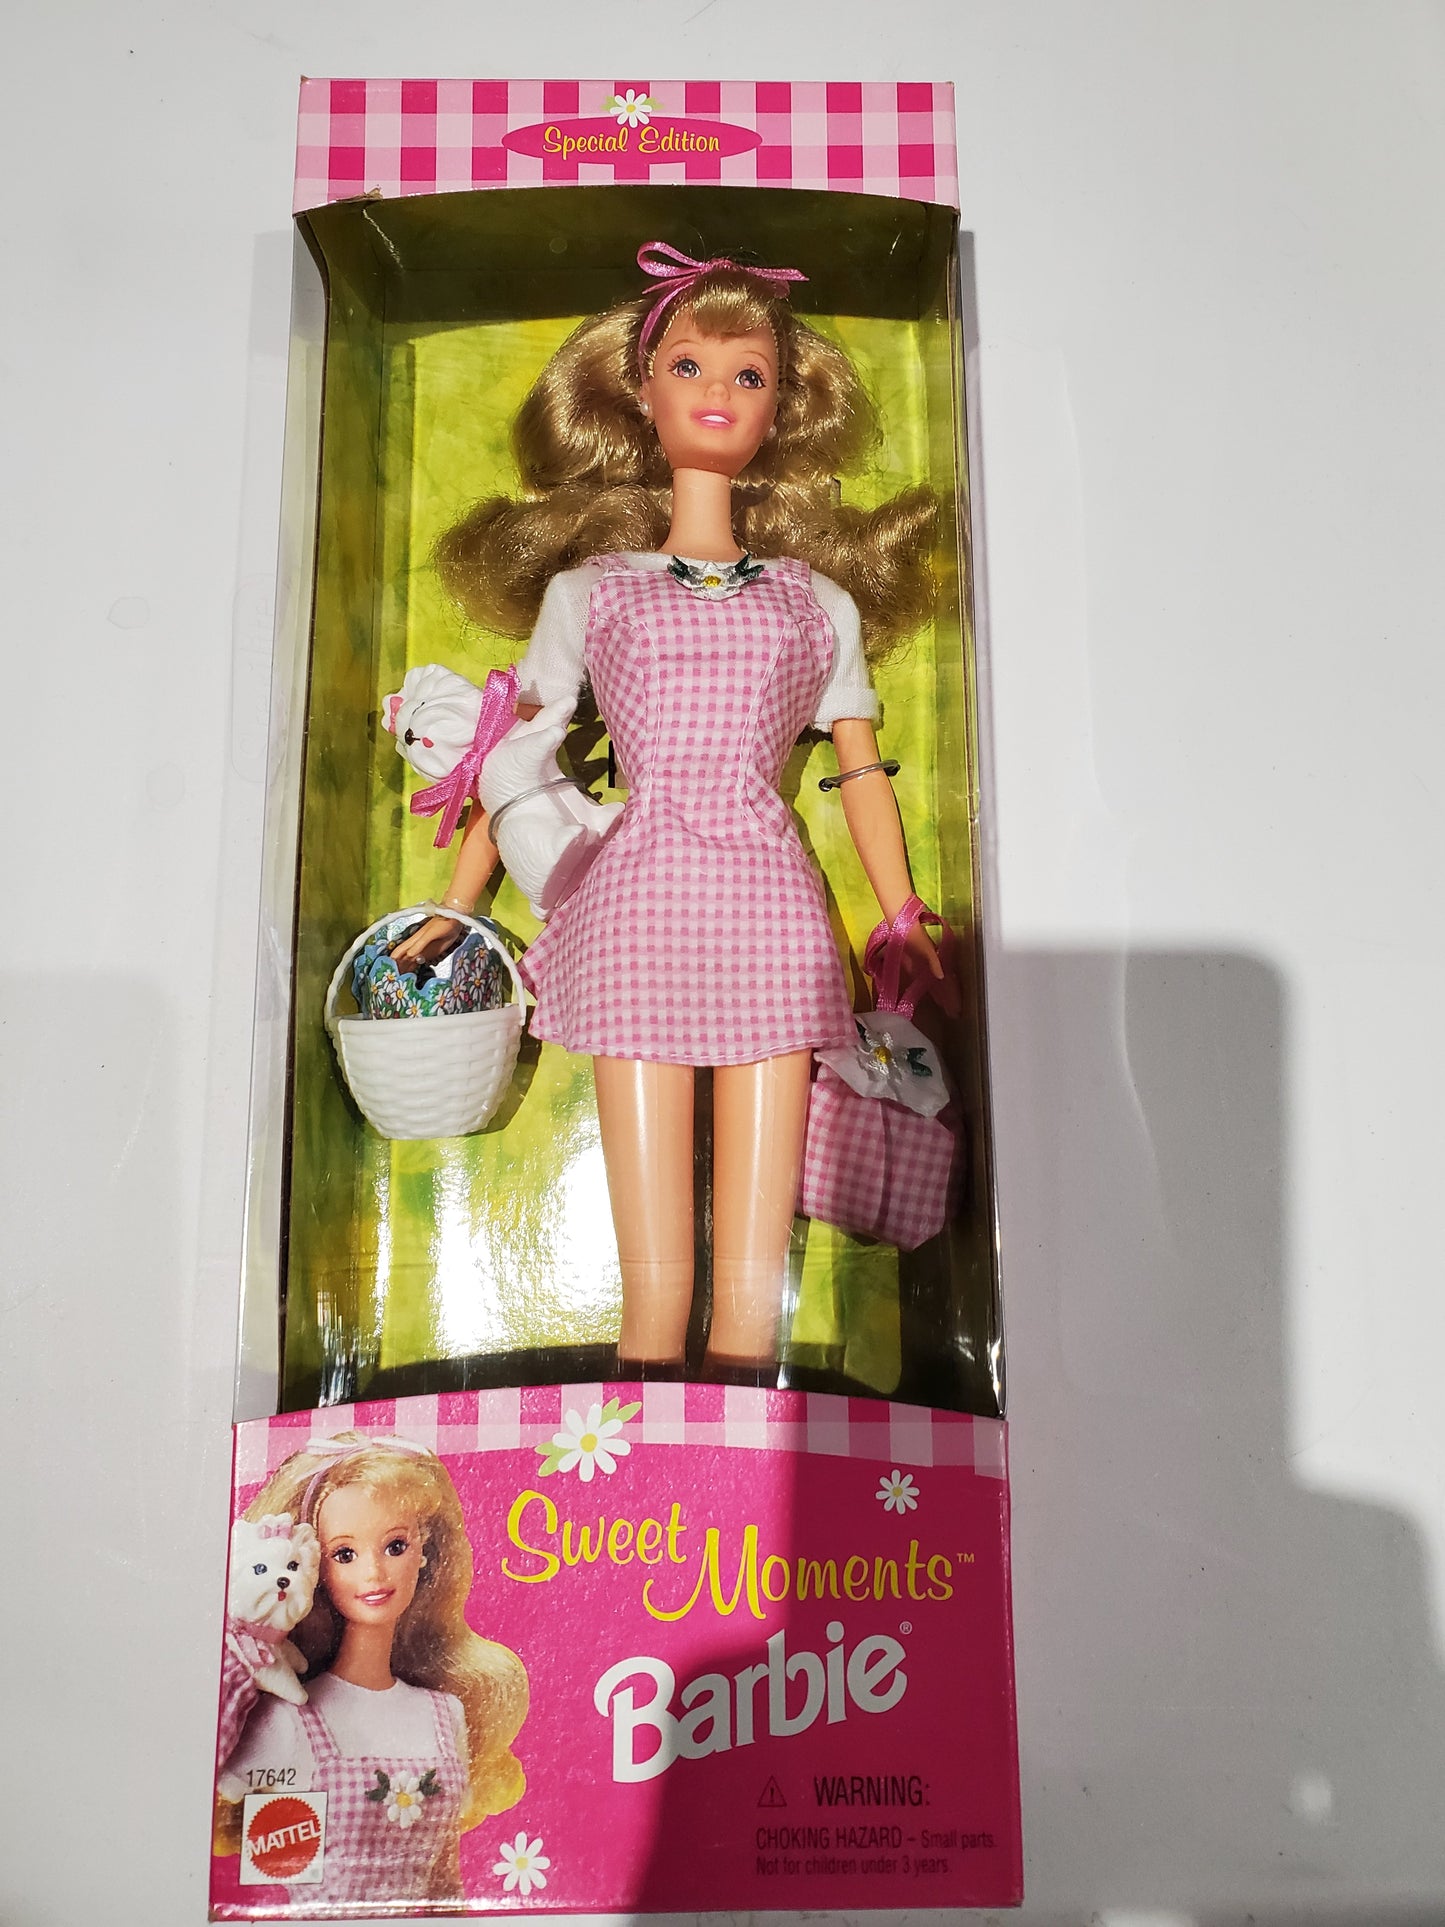 Sweet Moments Barbie Doll Mint in Box - 1996